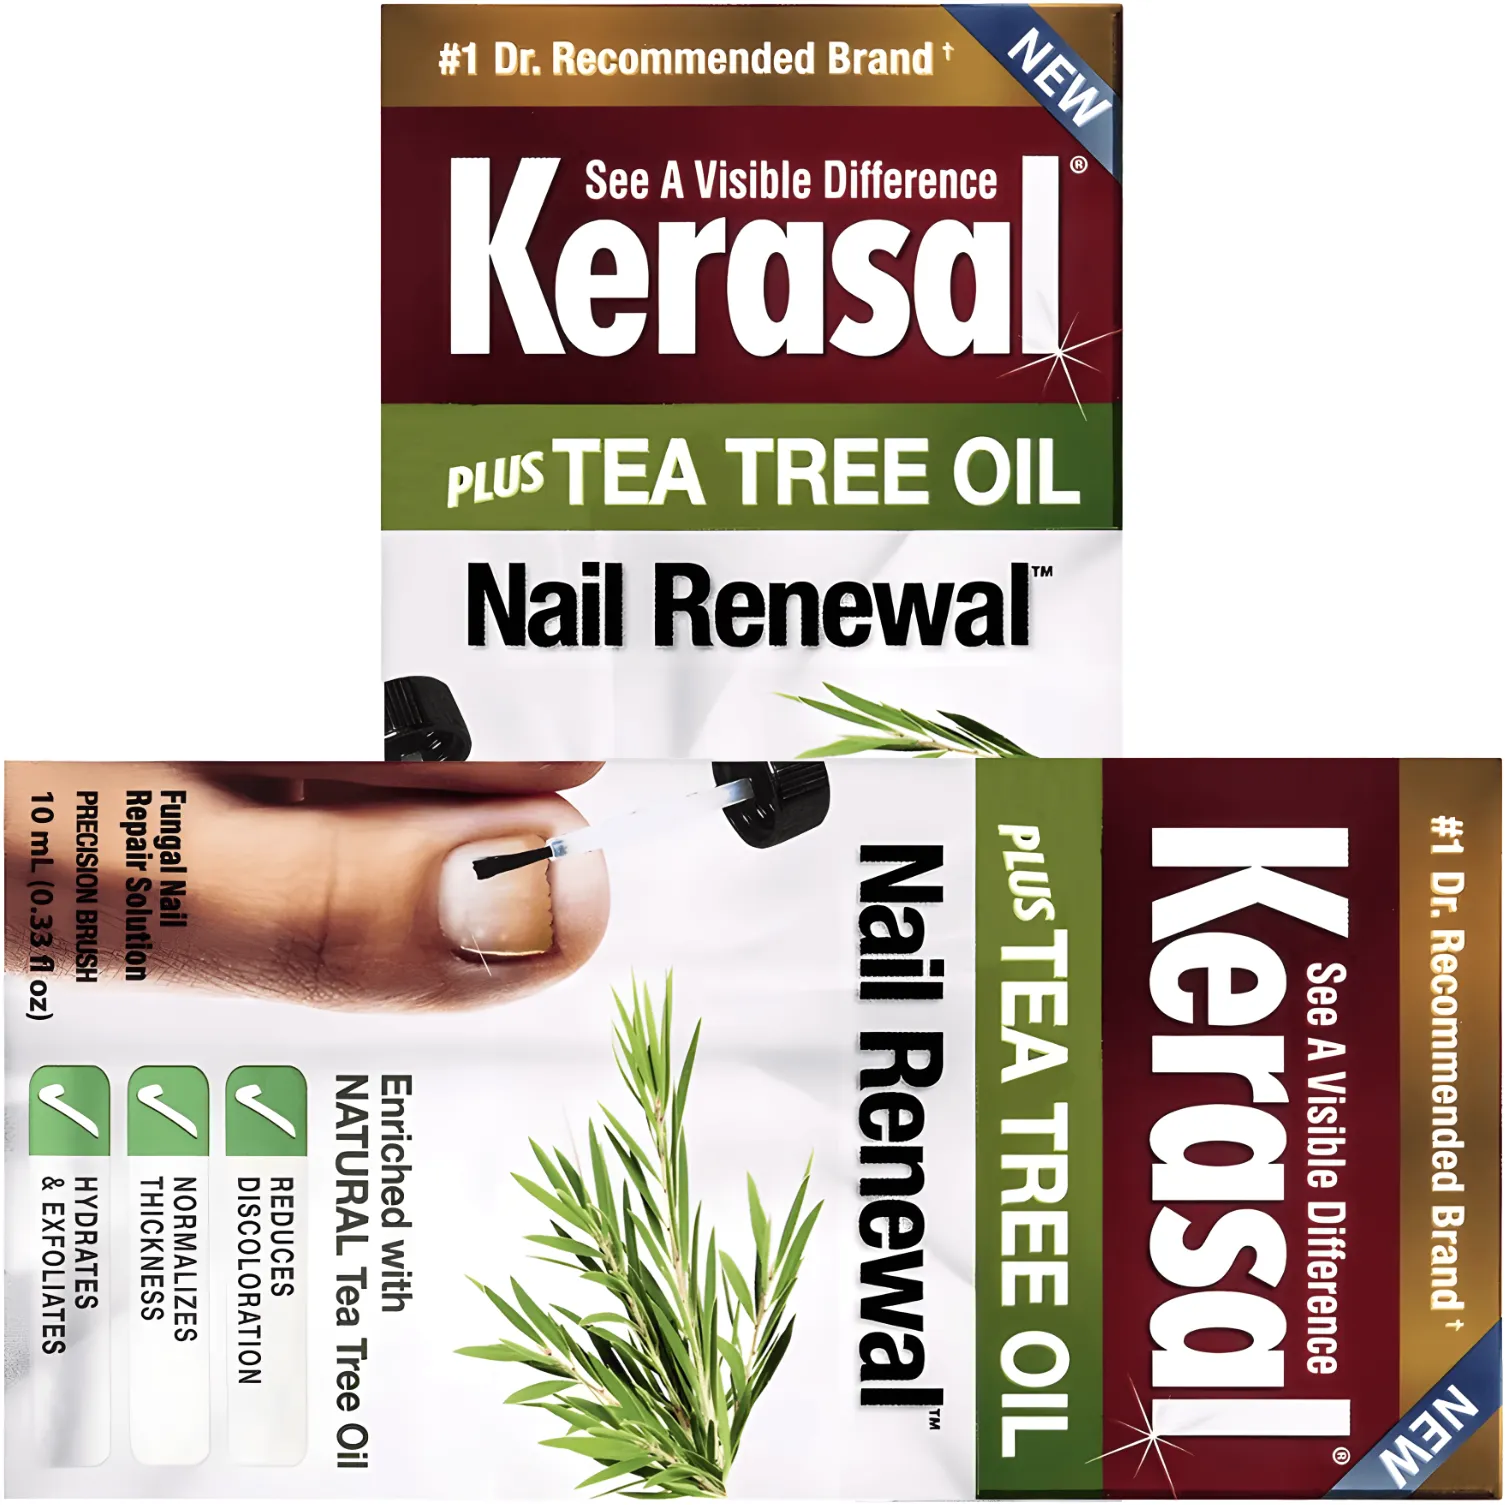 Free Kerasal Nail And Foot Care Products